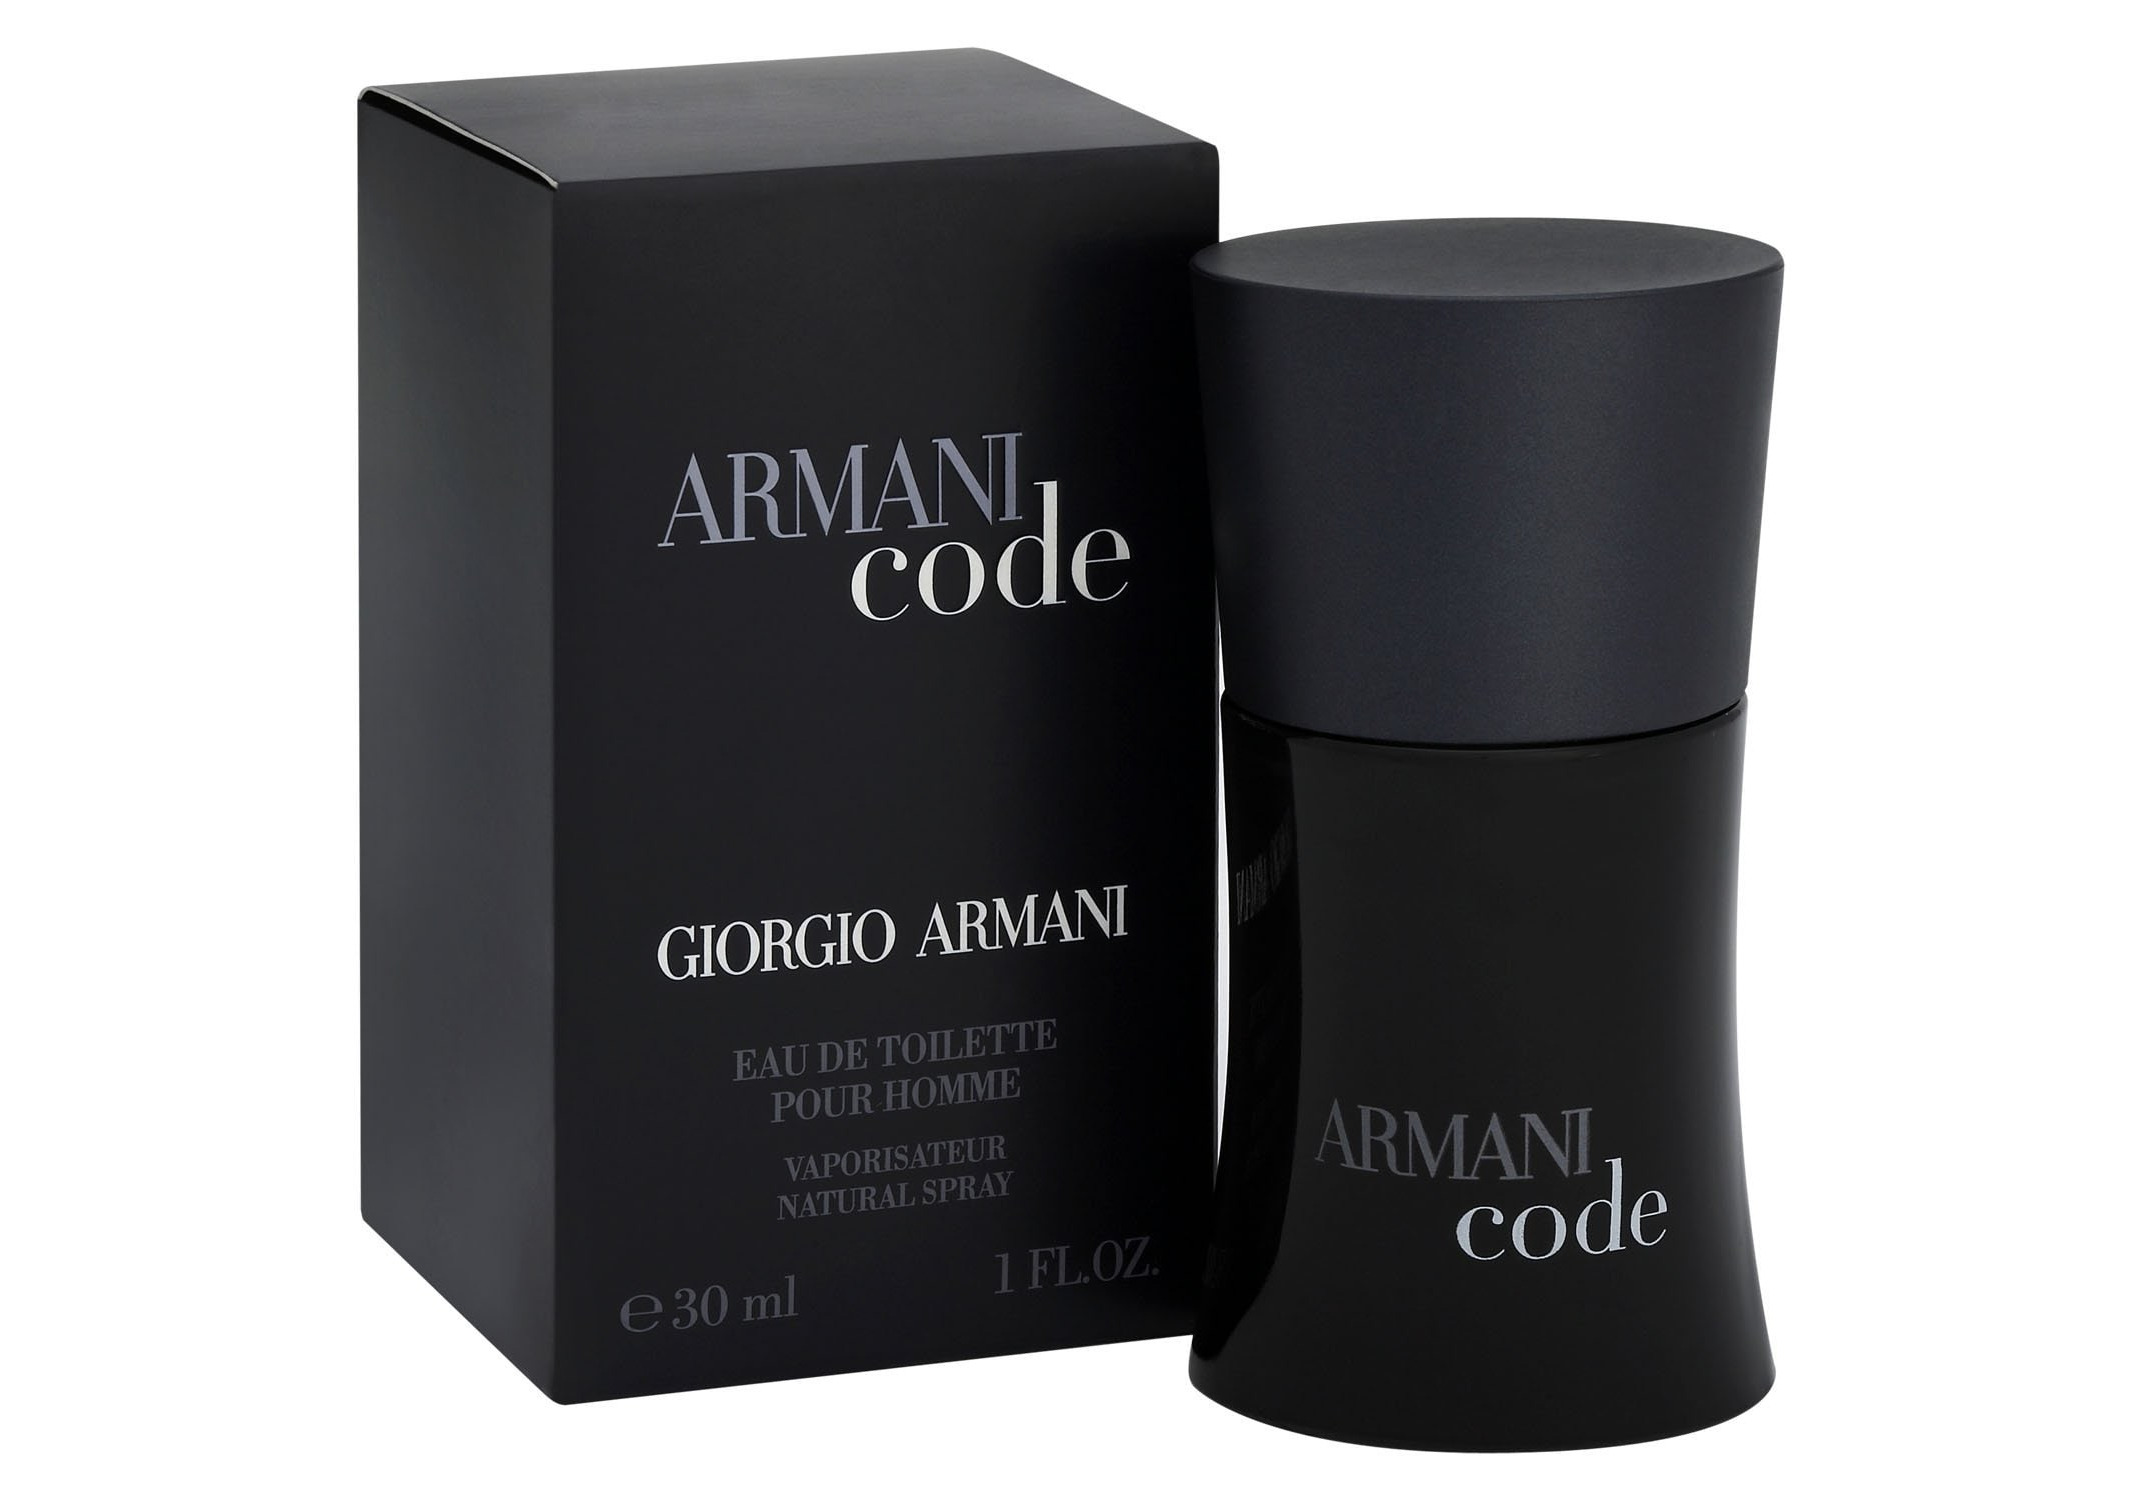 Code pour homme. Giorgio Armani "Armani code Parfum" 125 ml. Giorgio Armani code мужские духи. Armani code Parfum Giorgio Armani для мужчин. Giorgio Armani Armani code.